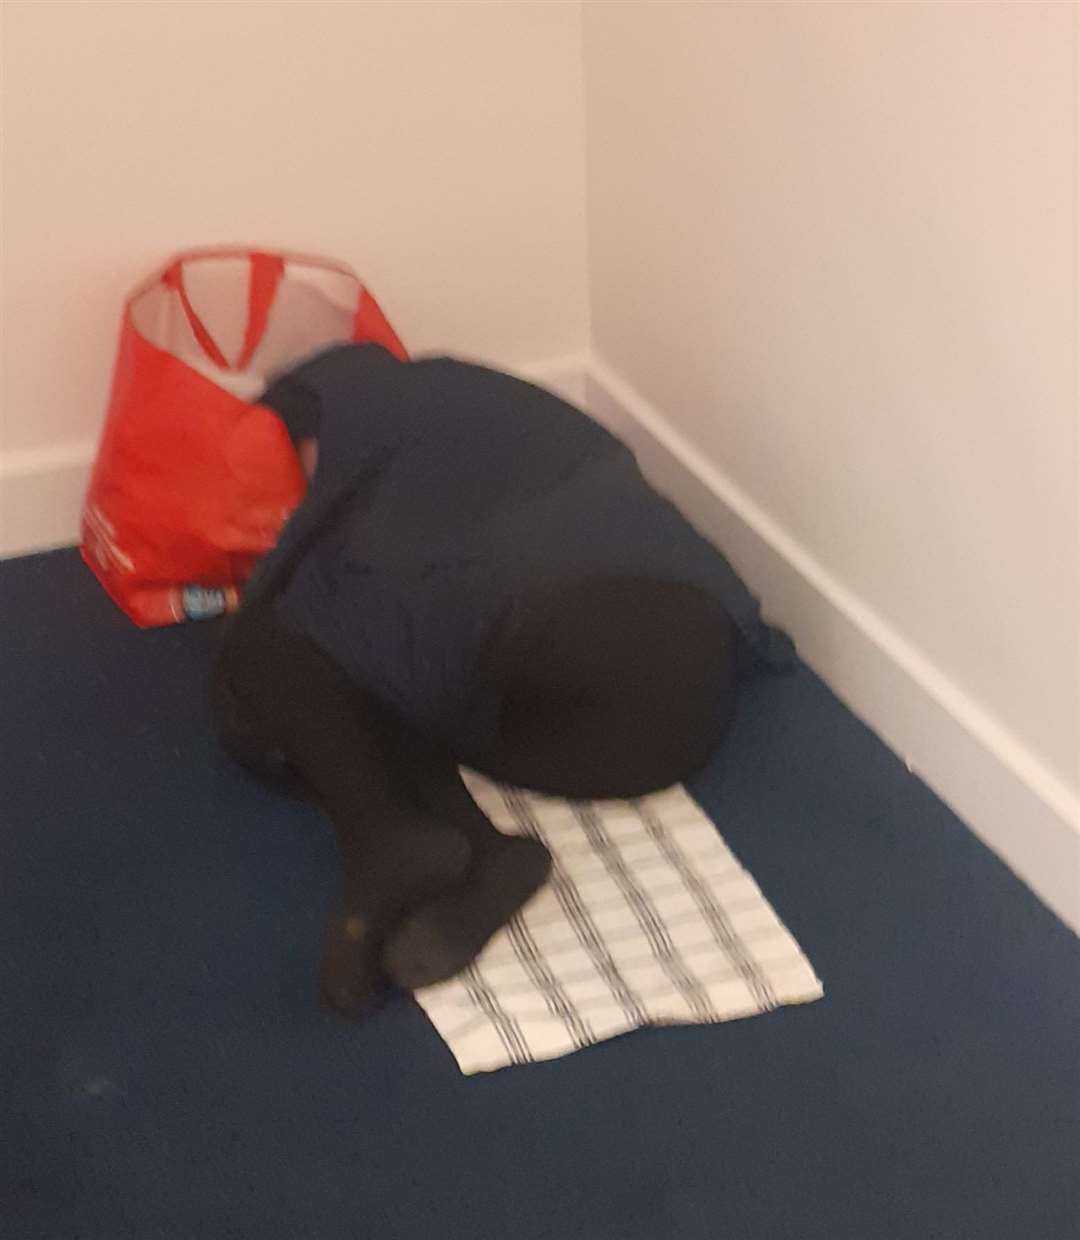 Woman found rough sleeping inside a block of flats